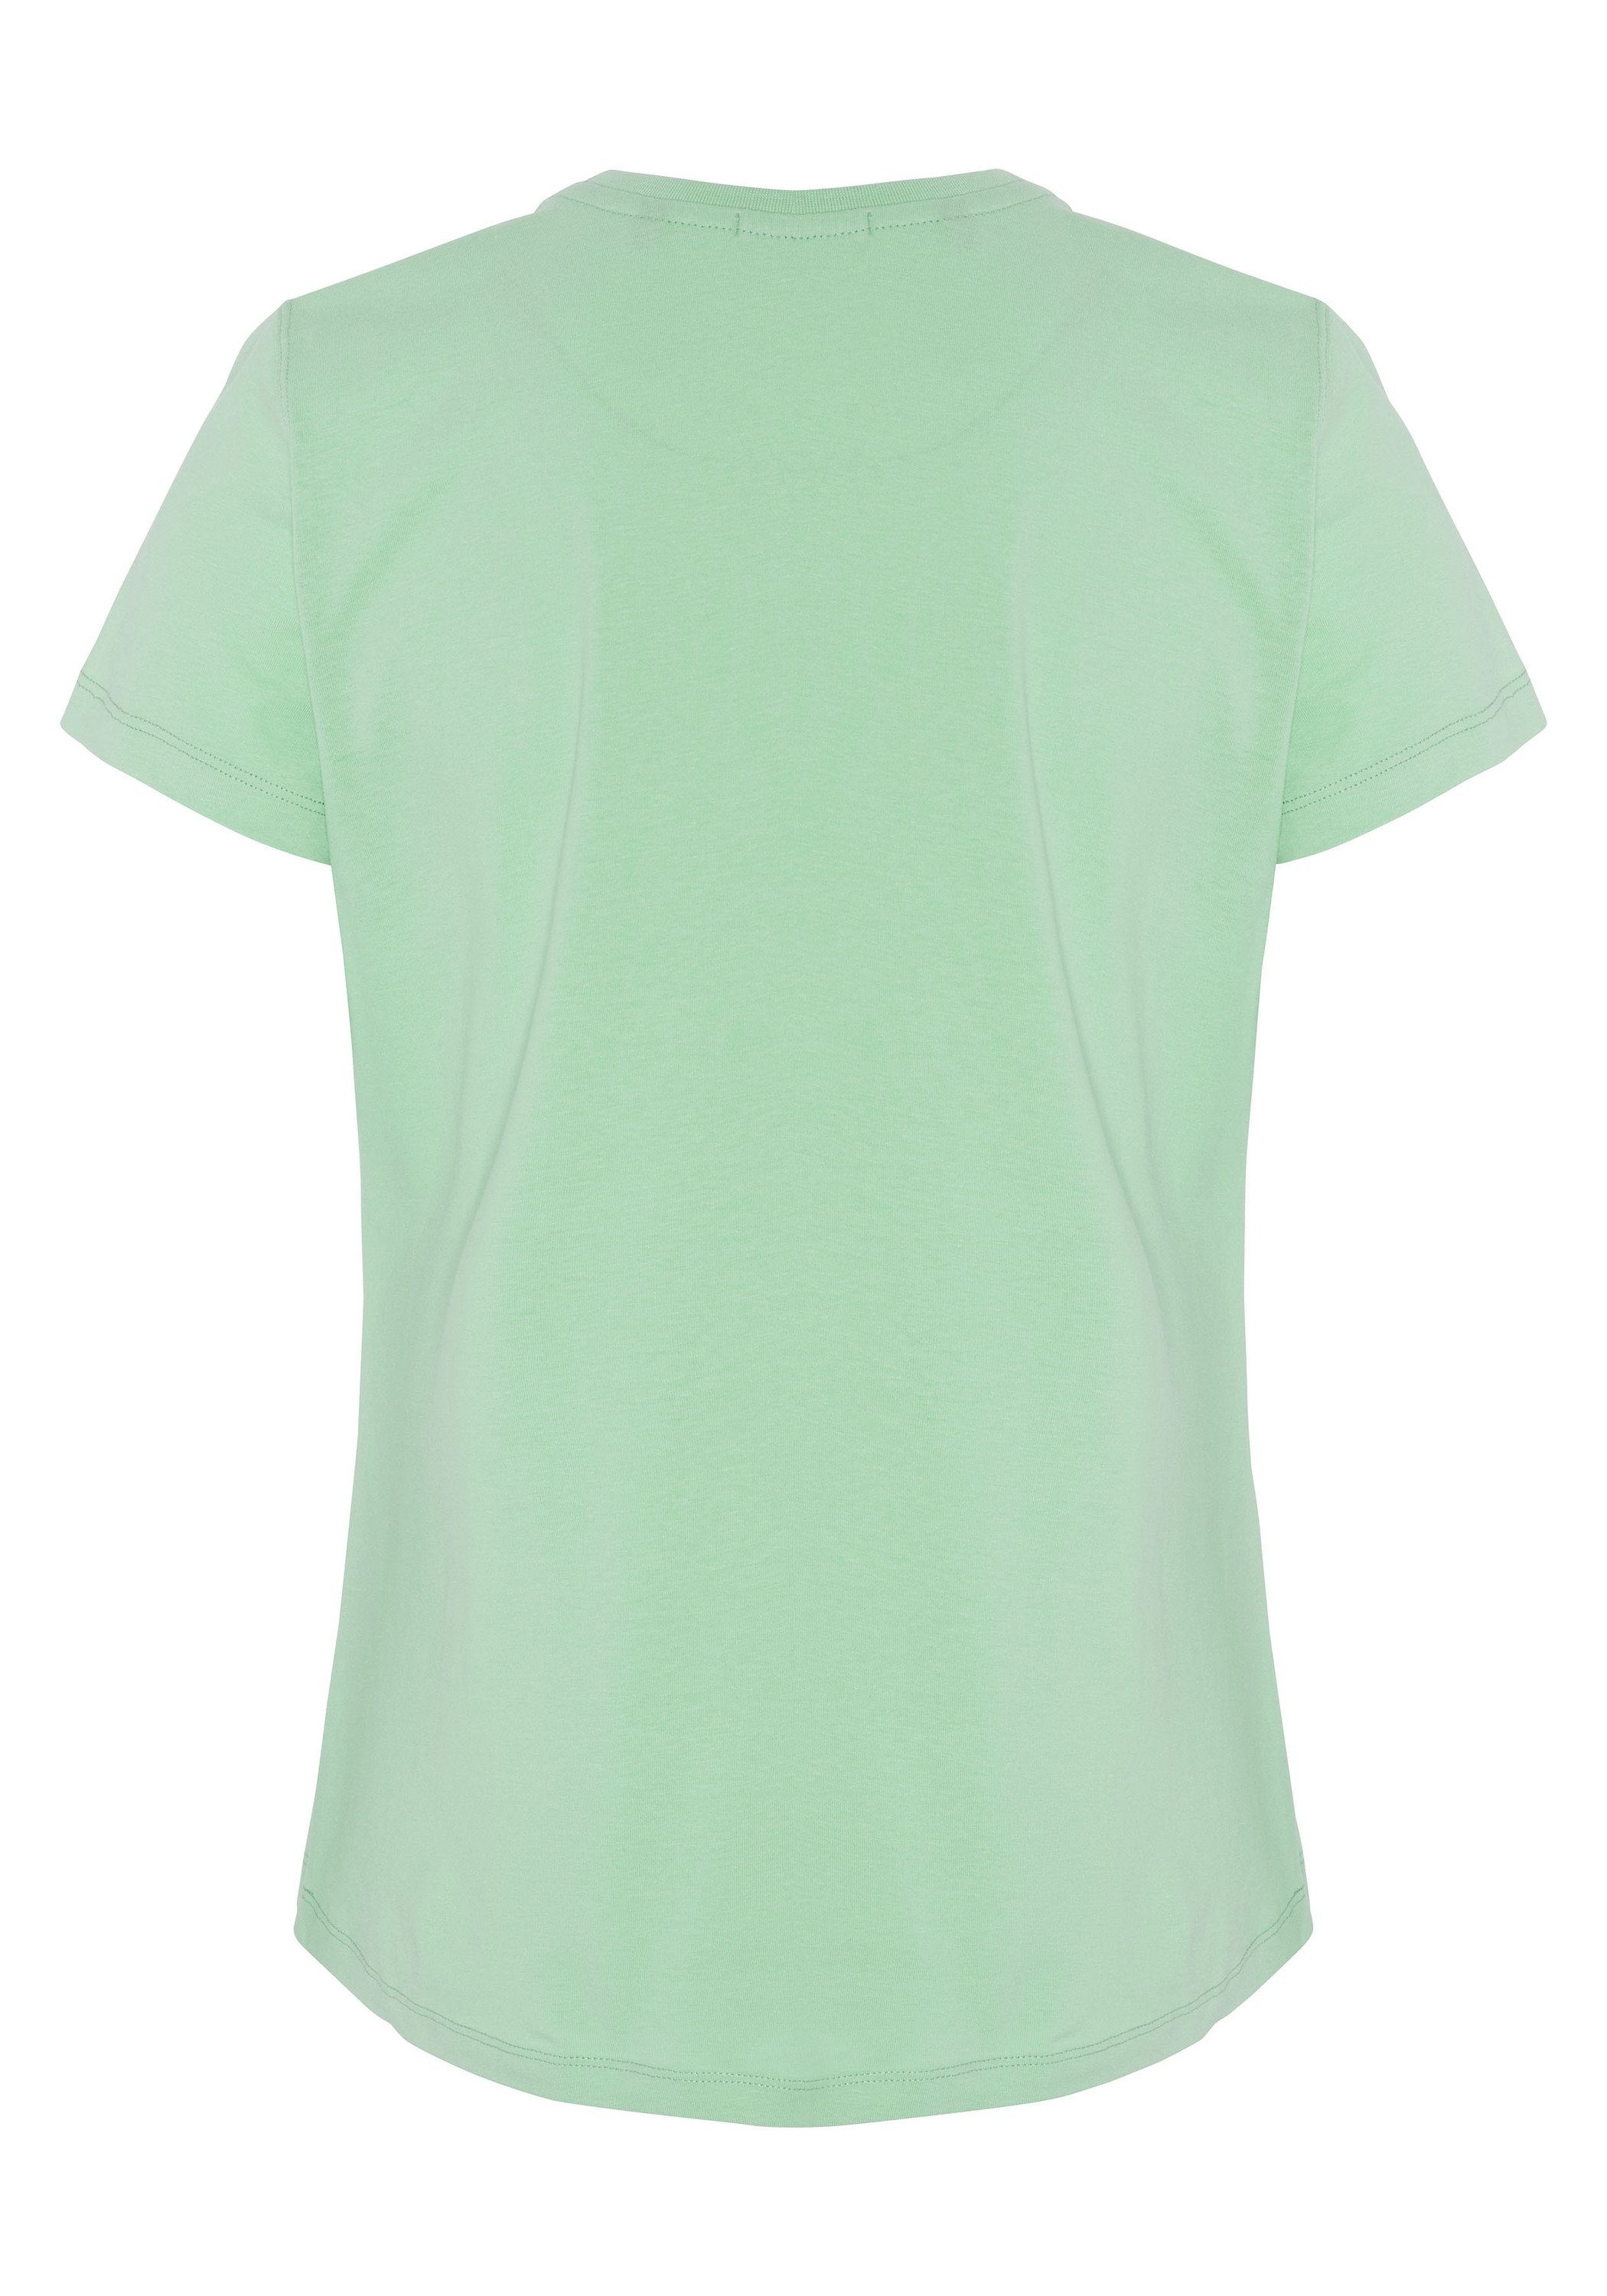 Chiemsee mit Green Neptune 1 farbenfrohem Print-Shirt Frontprint T-Shirt